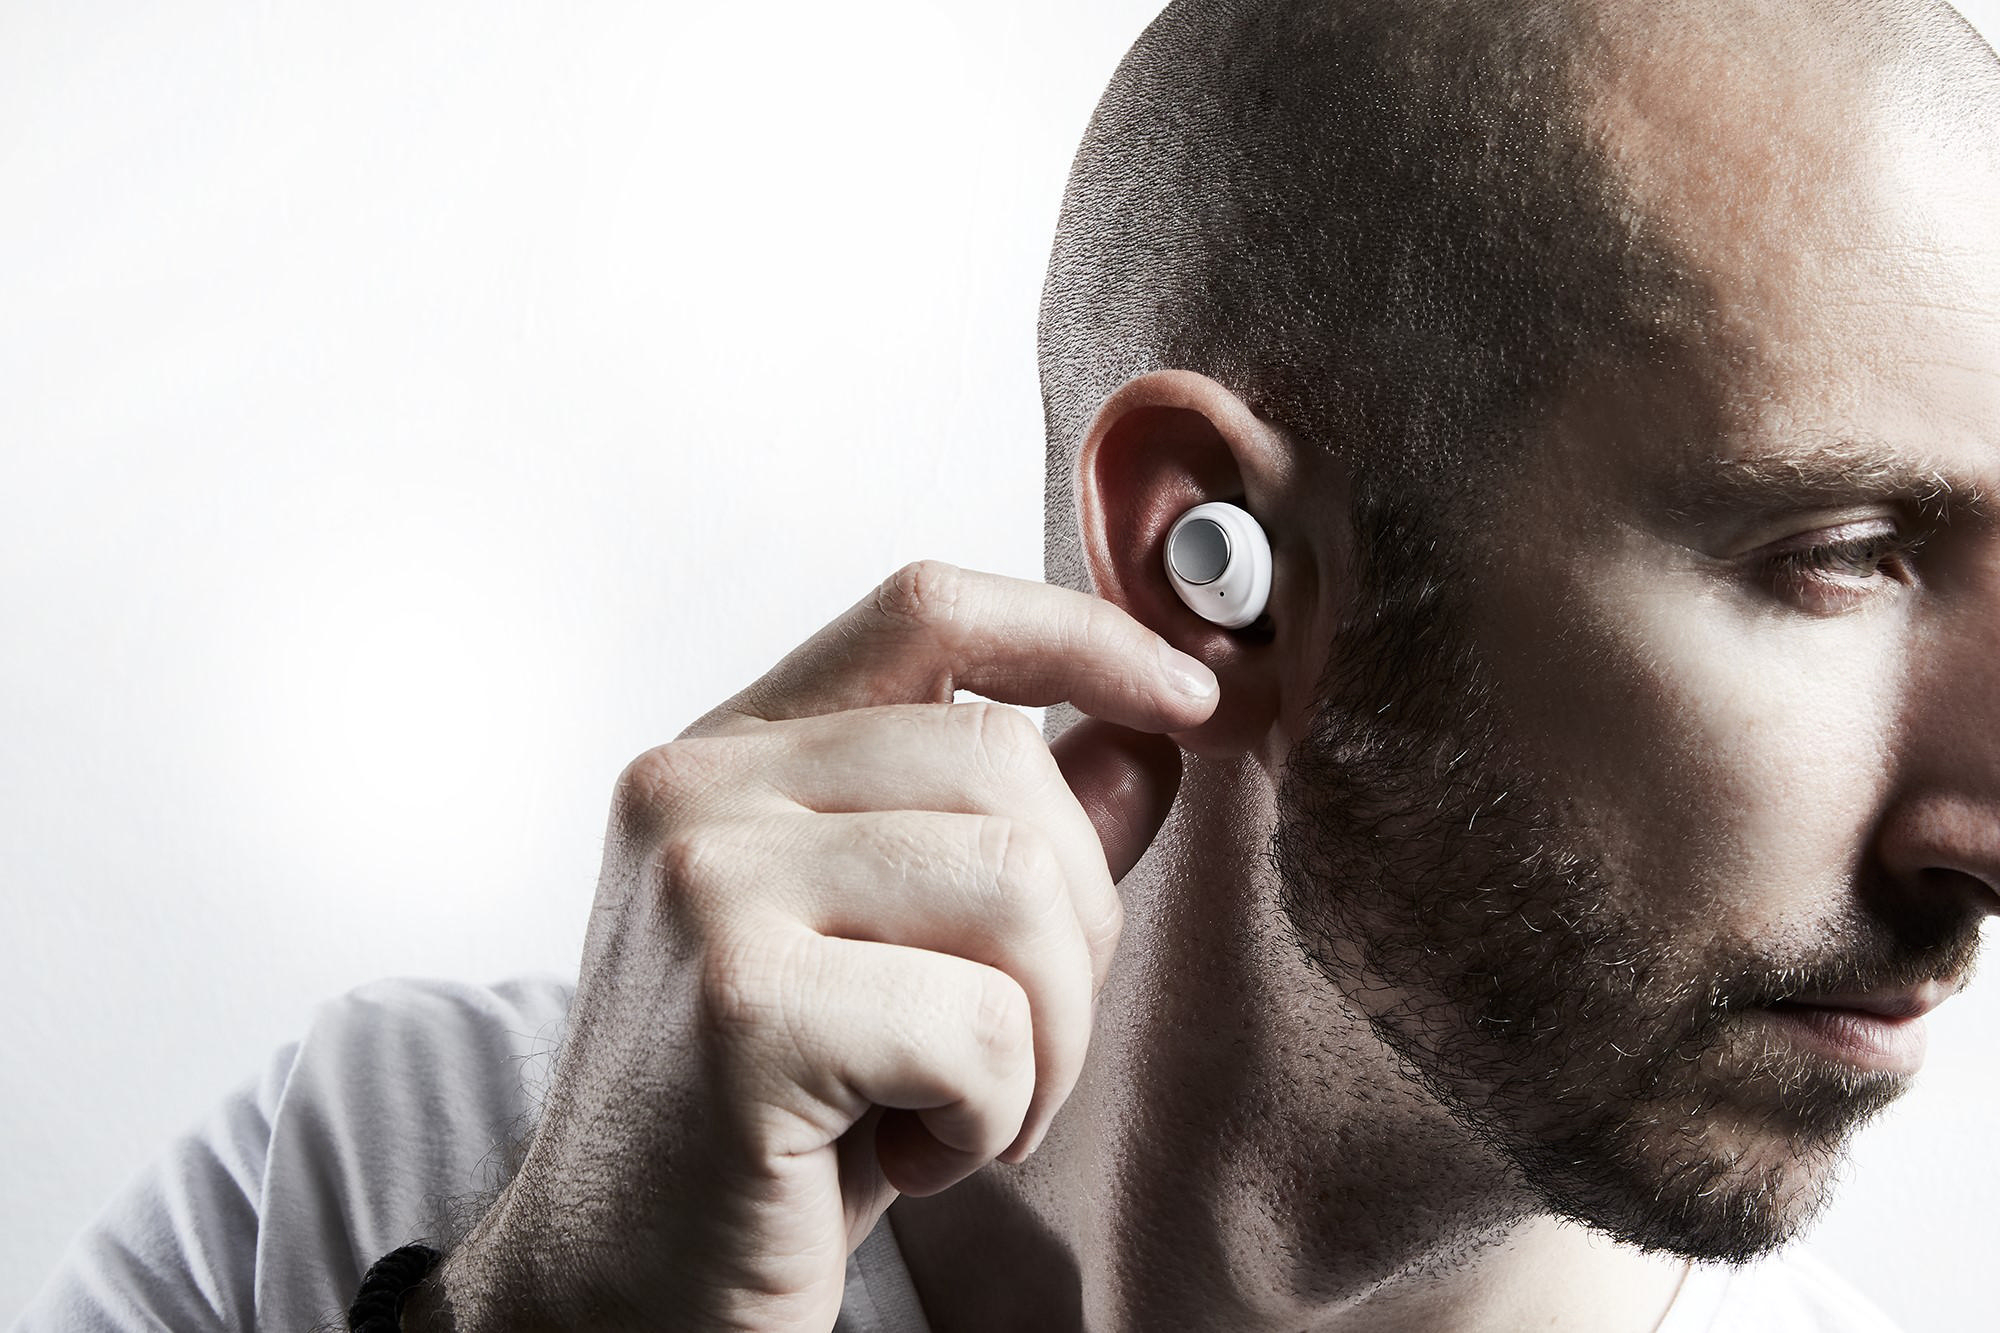 Onestyle Bluetooth Kopfhörer V15, TECHNOLOGY CORN Weiß In-ear